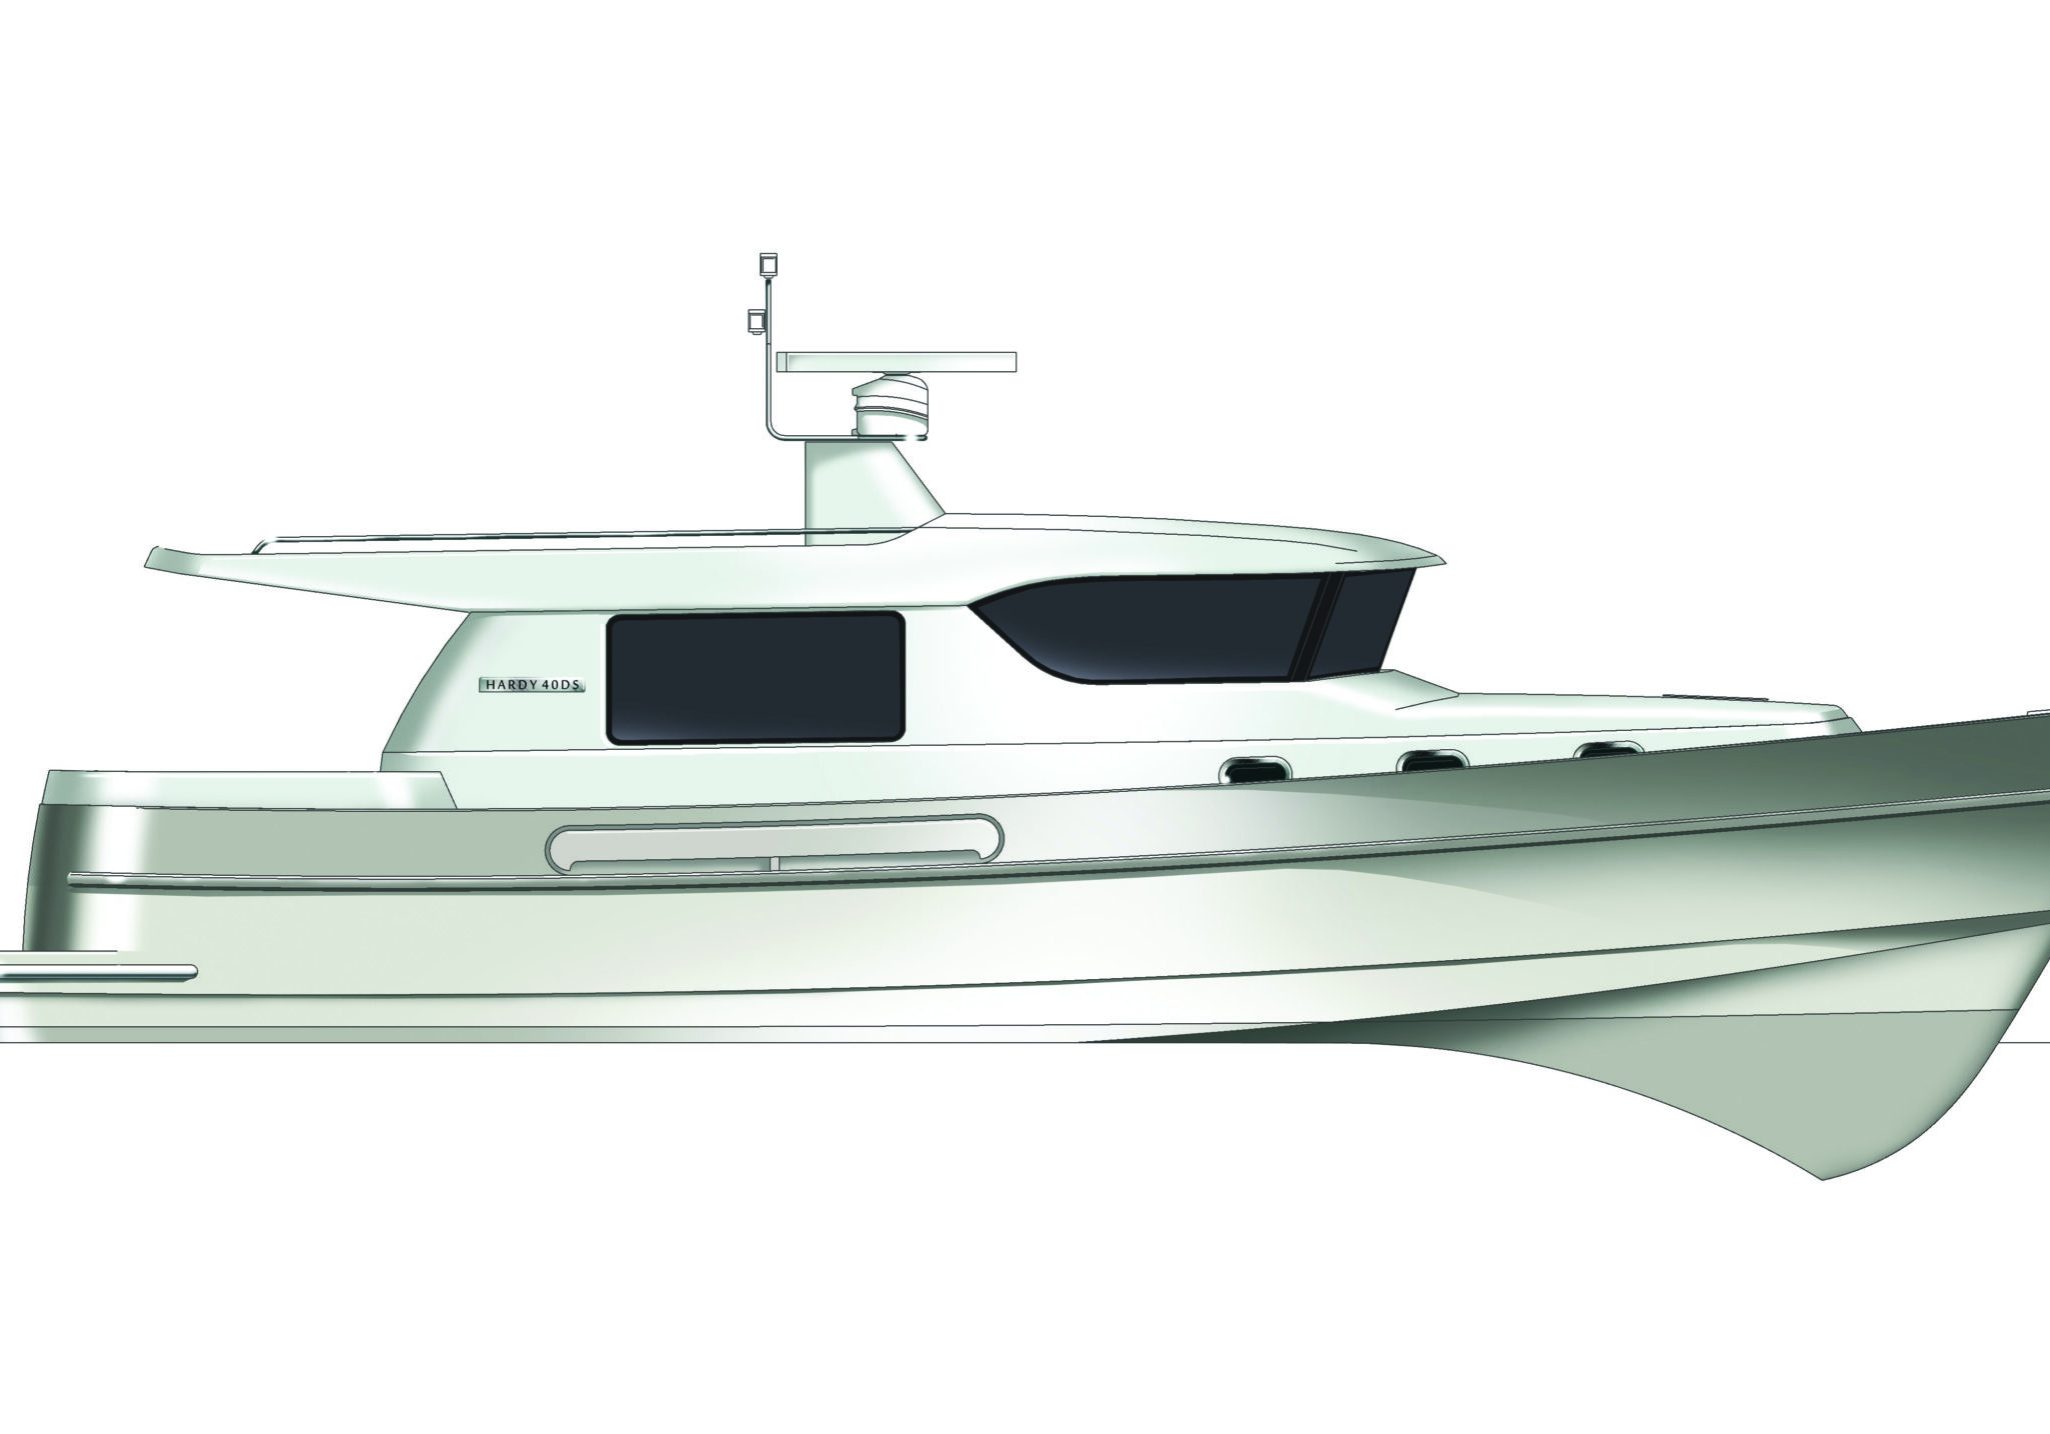 Hardy 40DS Profile Hardy Motor Yachts Boat Sales Sydney Davis Marine Brokerage